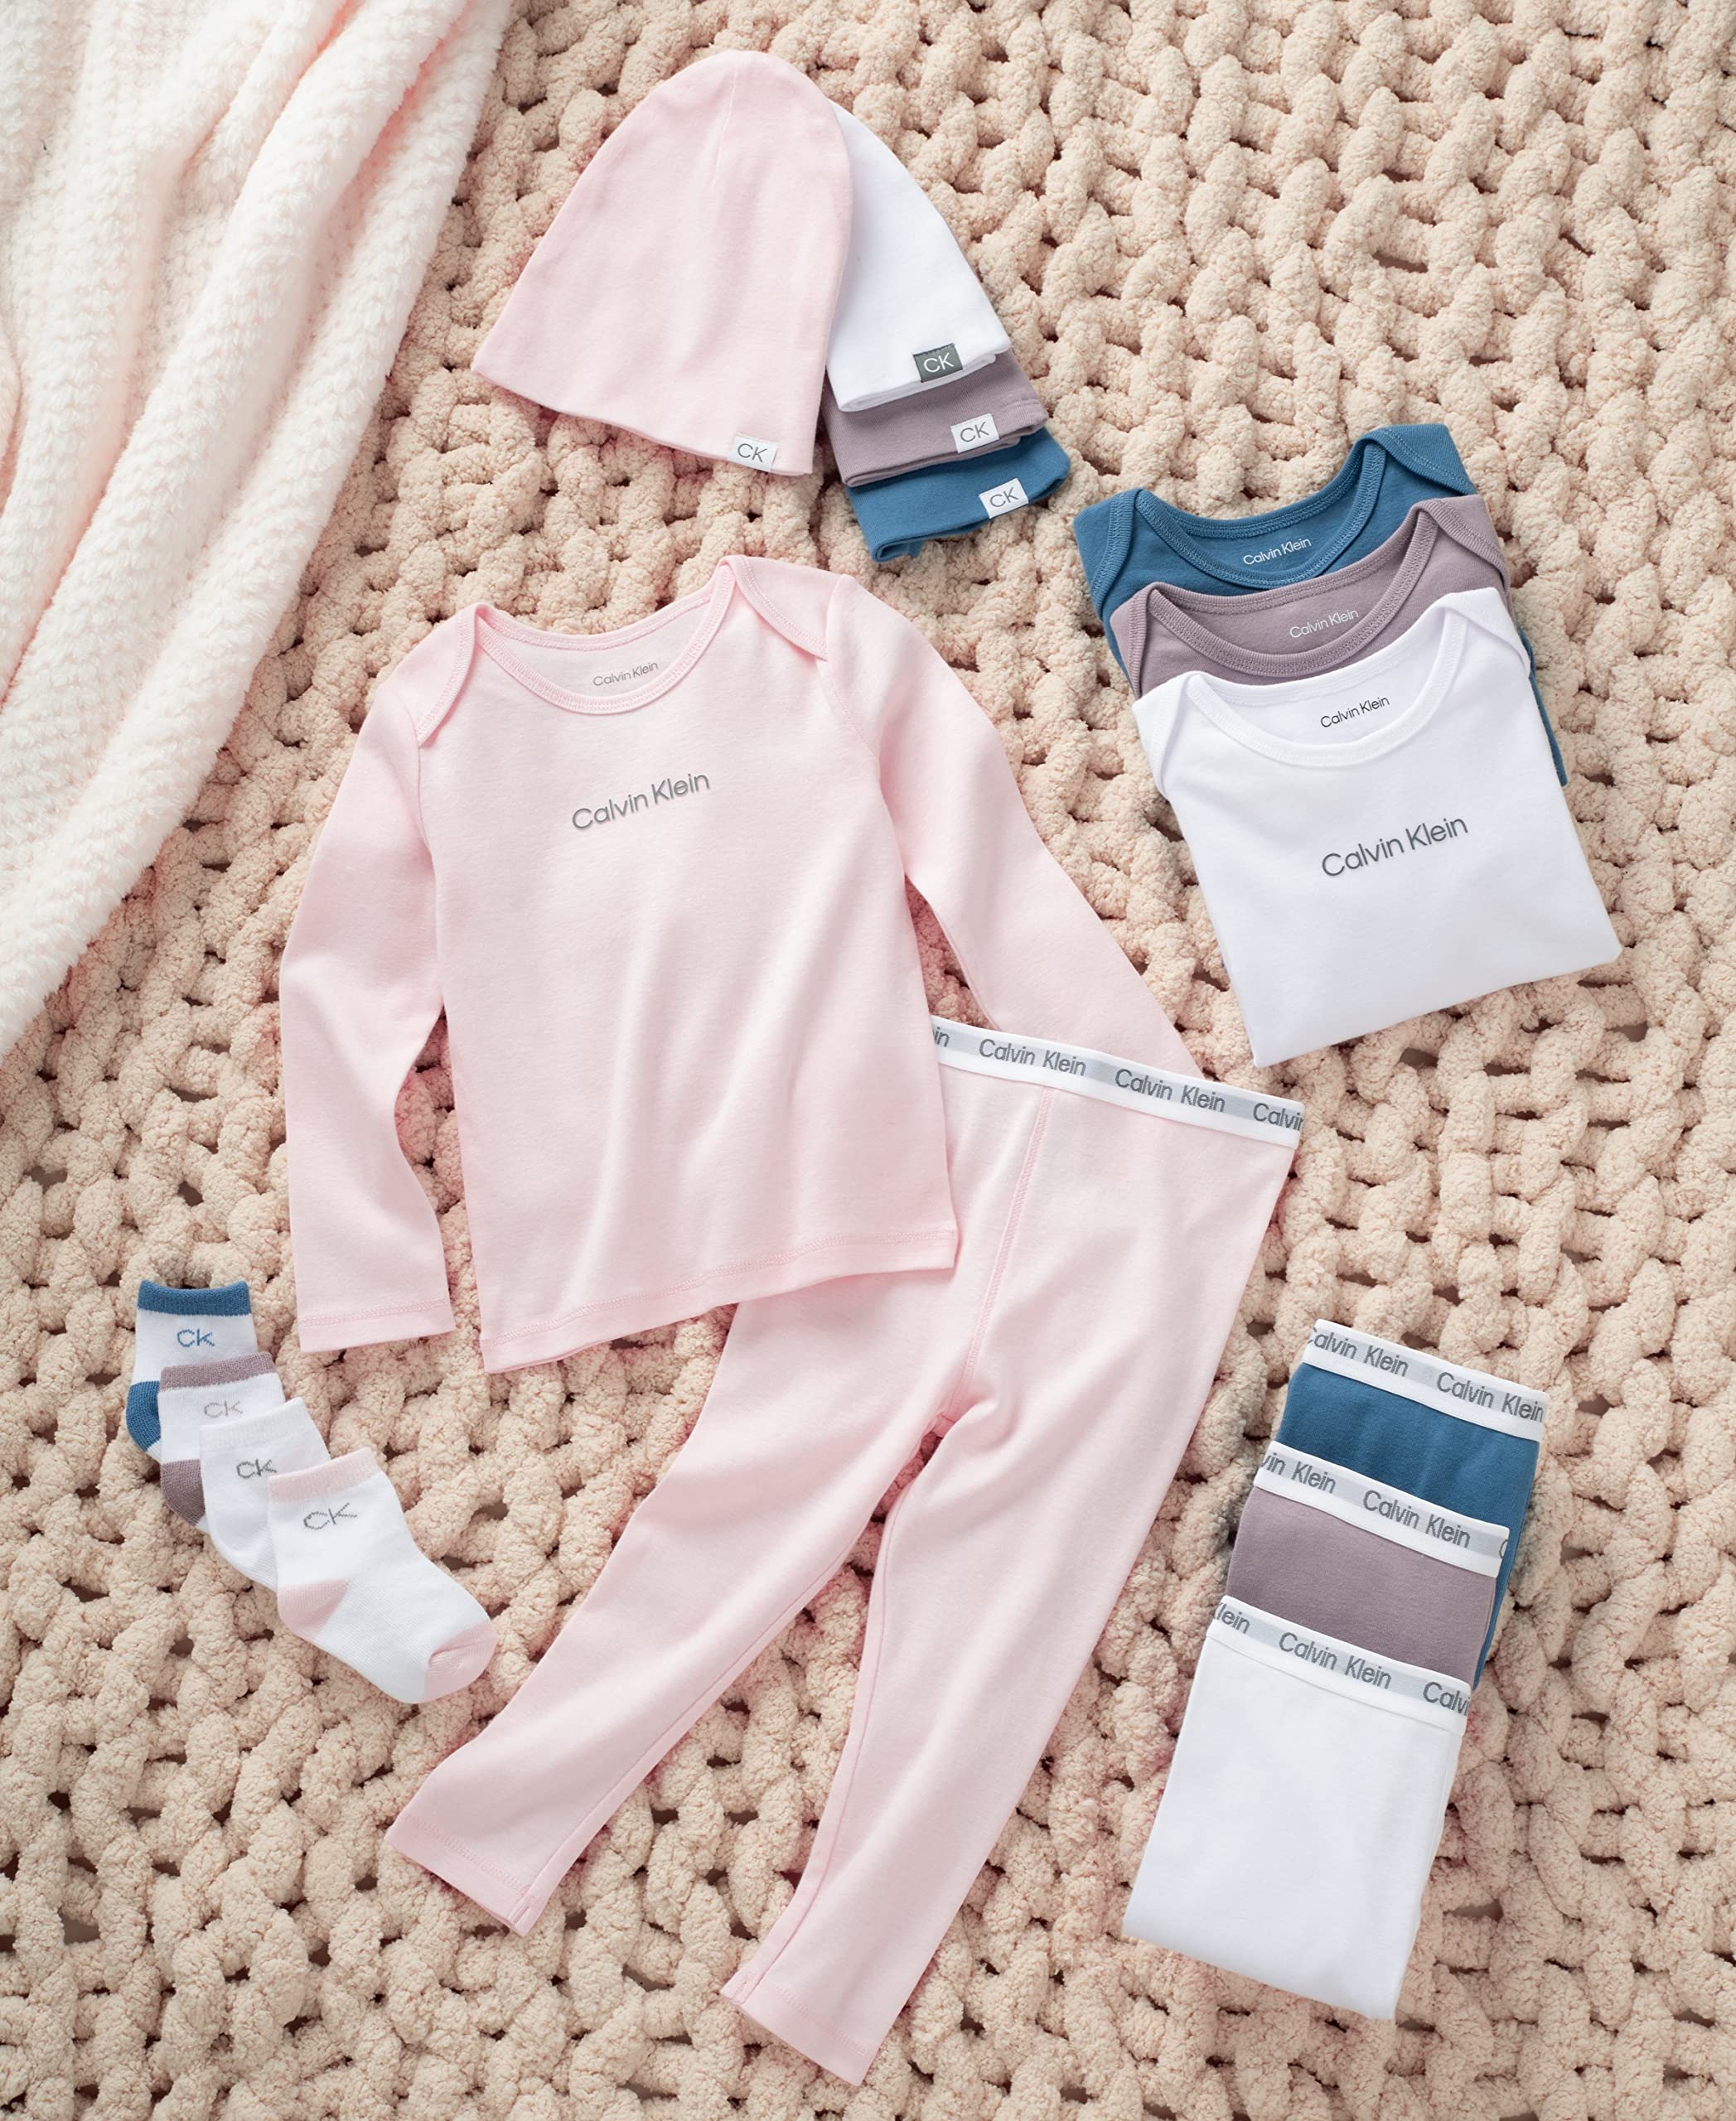 Calvin Klein baby-boys 4-piece Set With Long Sleeve Tee & Pants, Ultra-soft Beanie & Socks Included